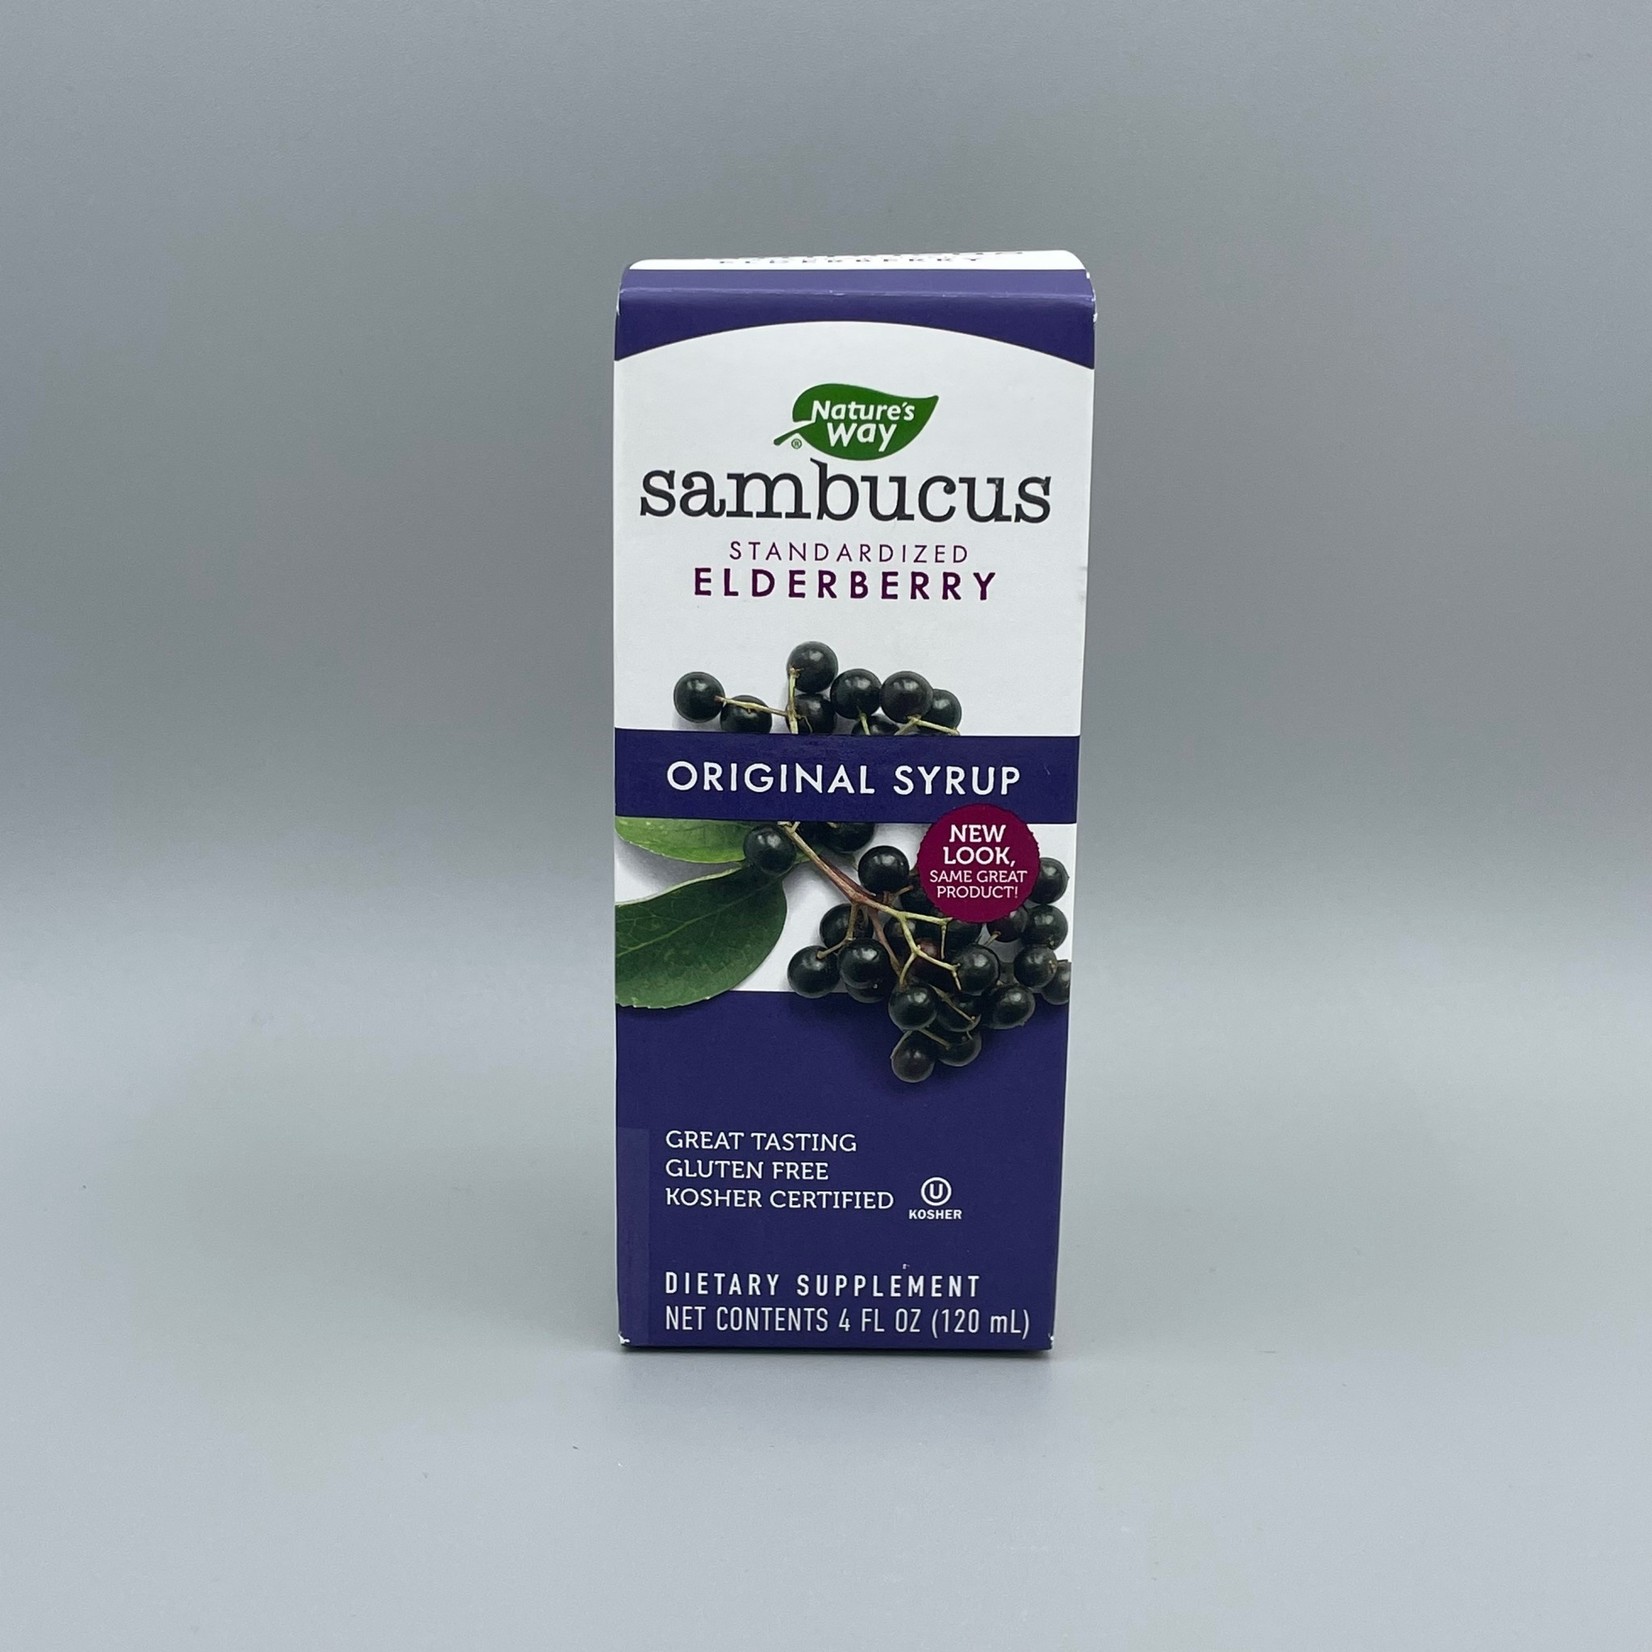 Nature‘s Way Sambucus (Standardized Elderberry, Original Syrup), 4 fl oz